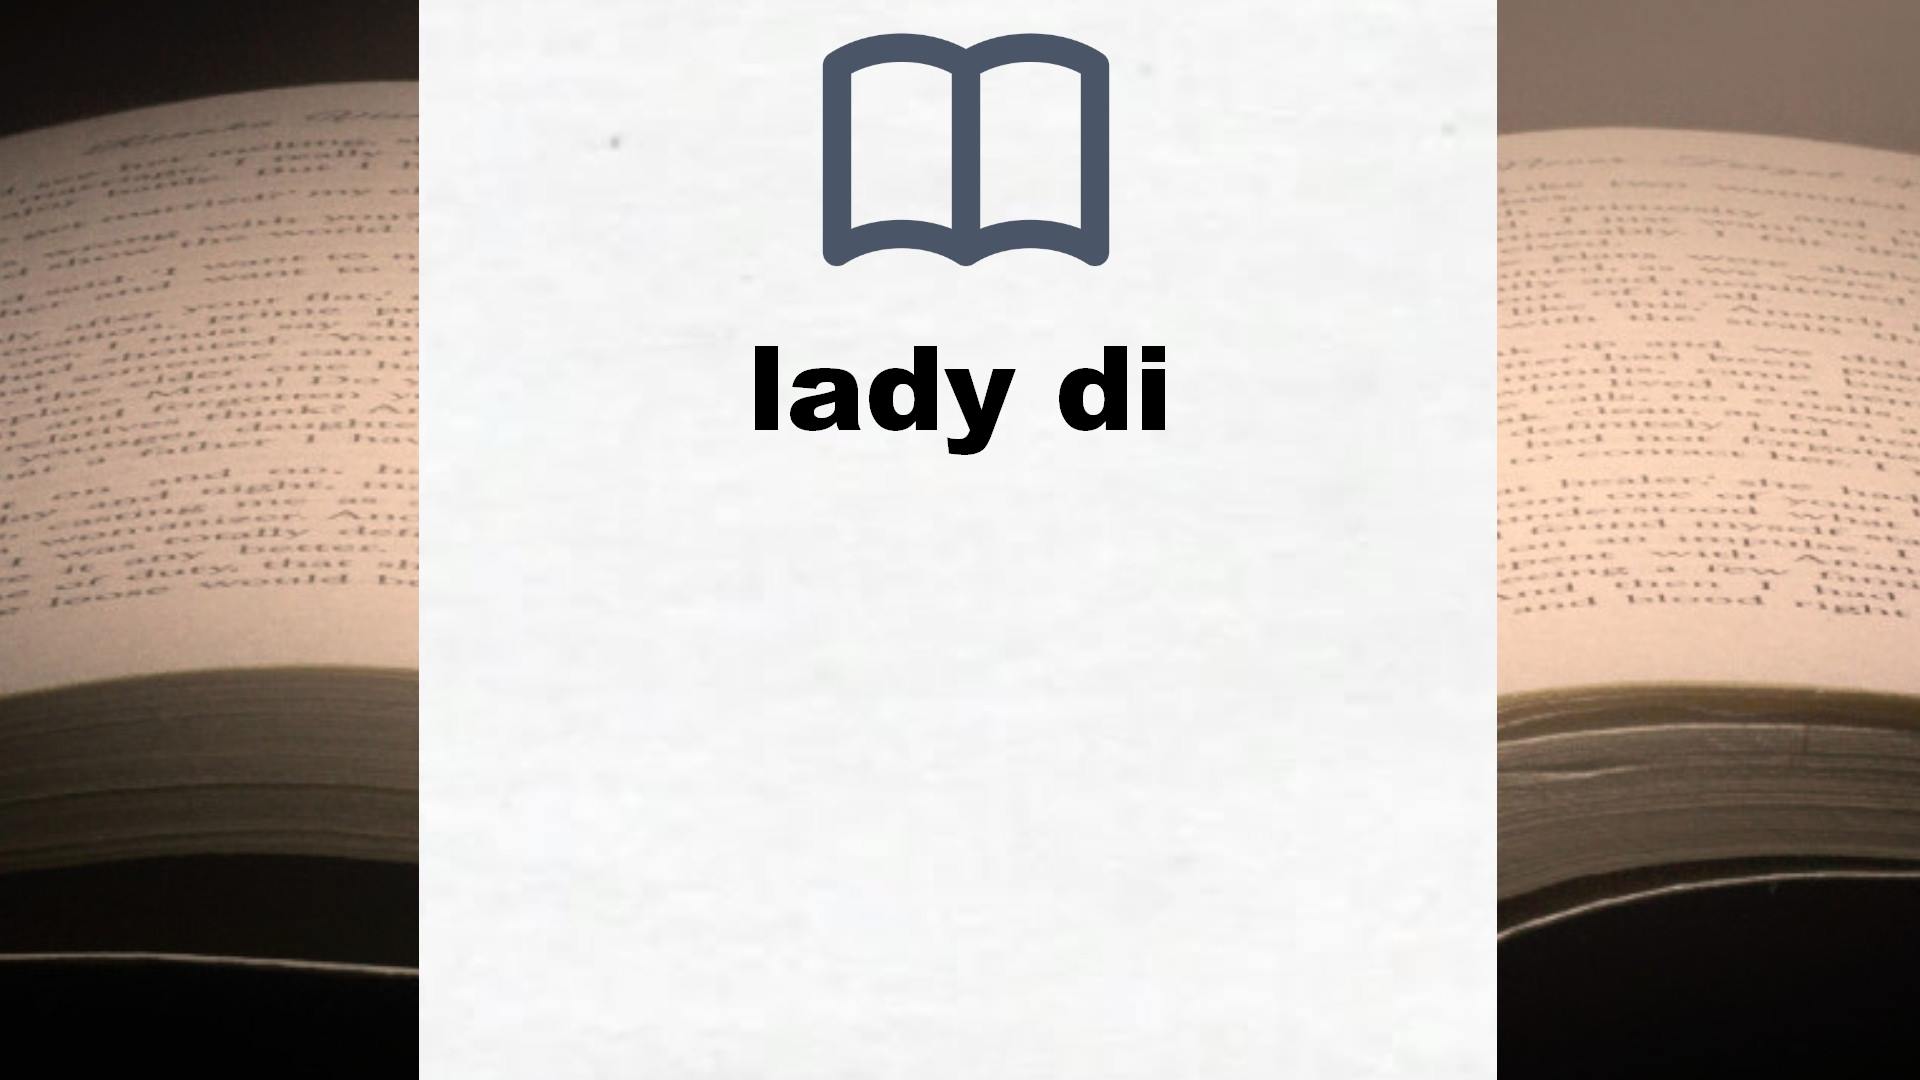 Libros sobre lady di